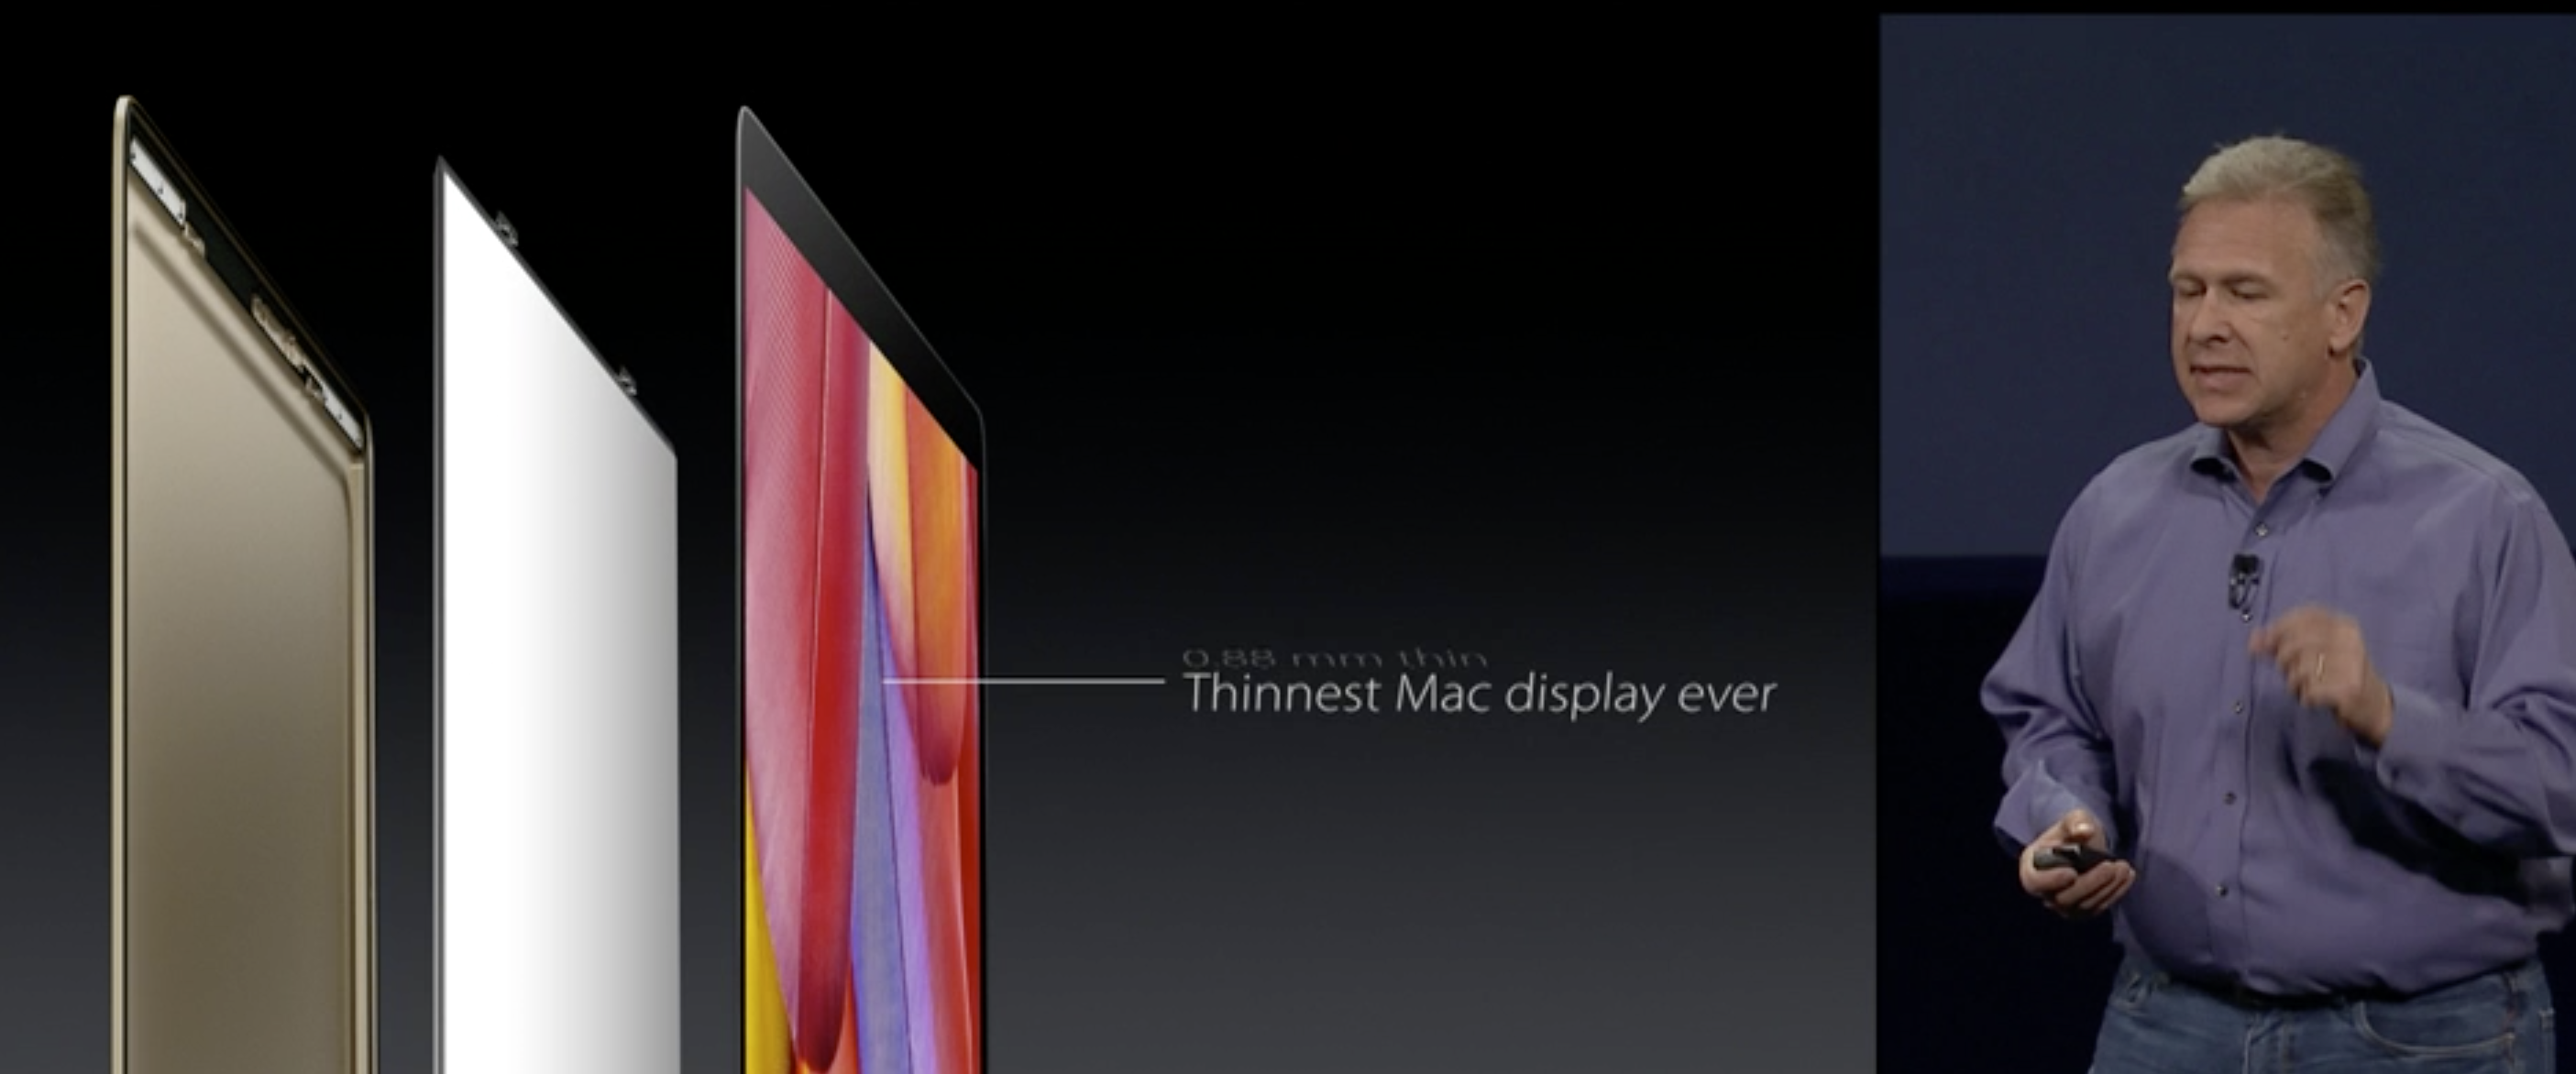 macbook-gold-display